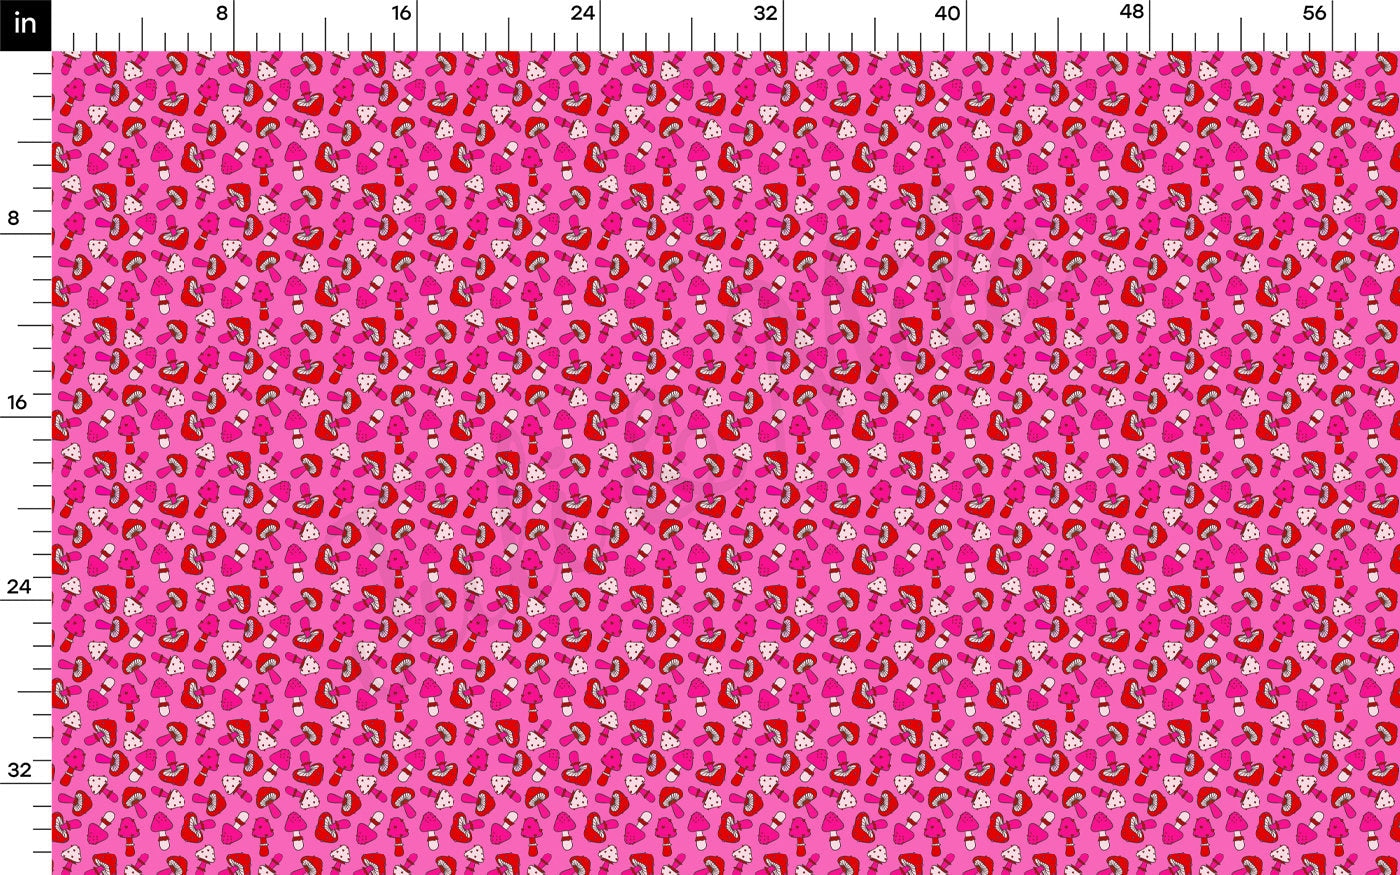 Rib Knit Fabric RBK2229 Valentine's Day